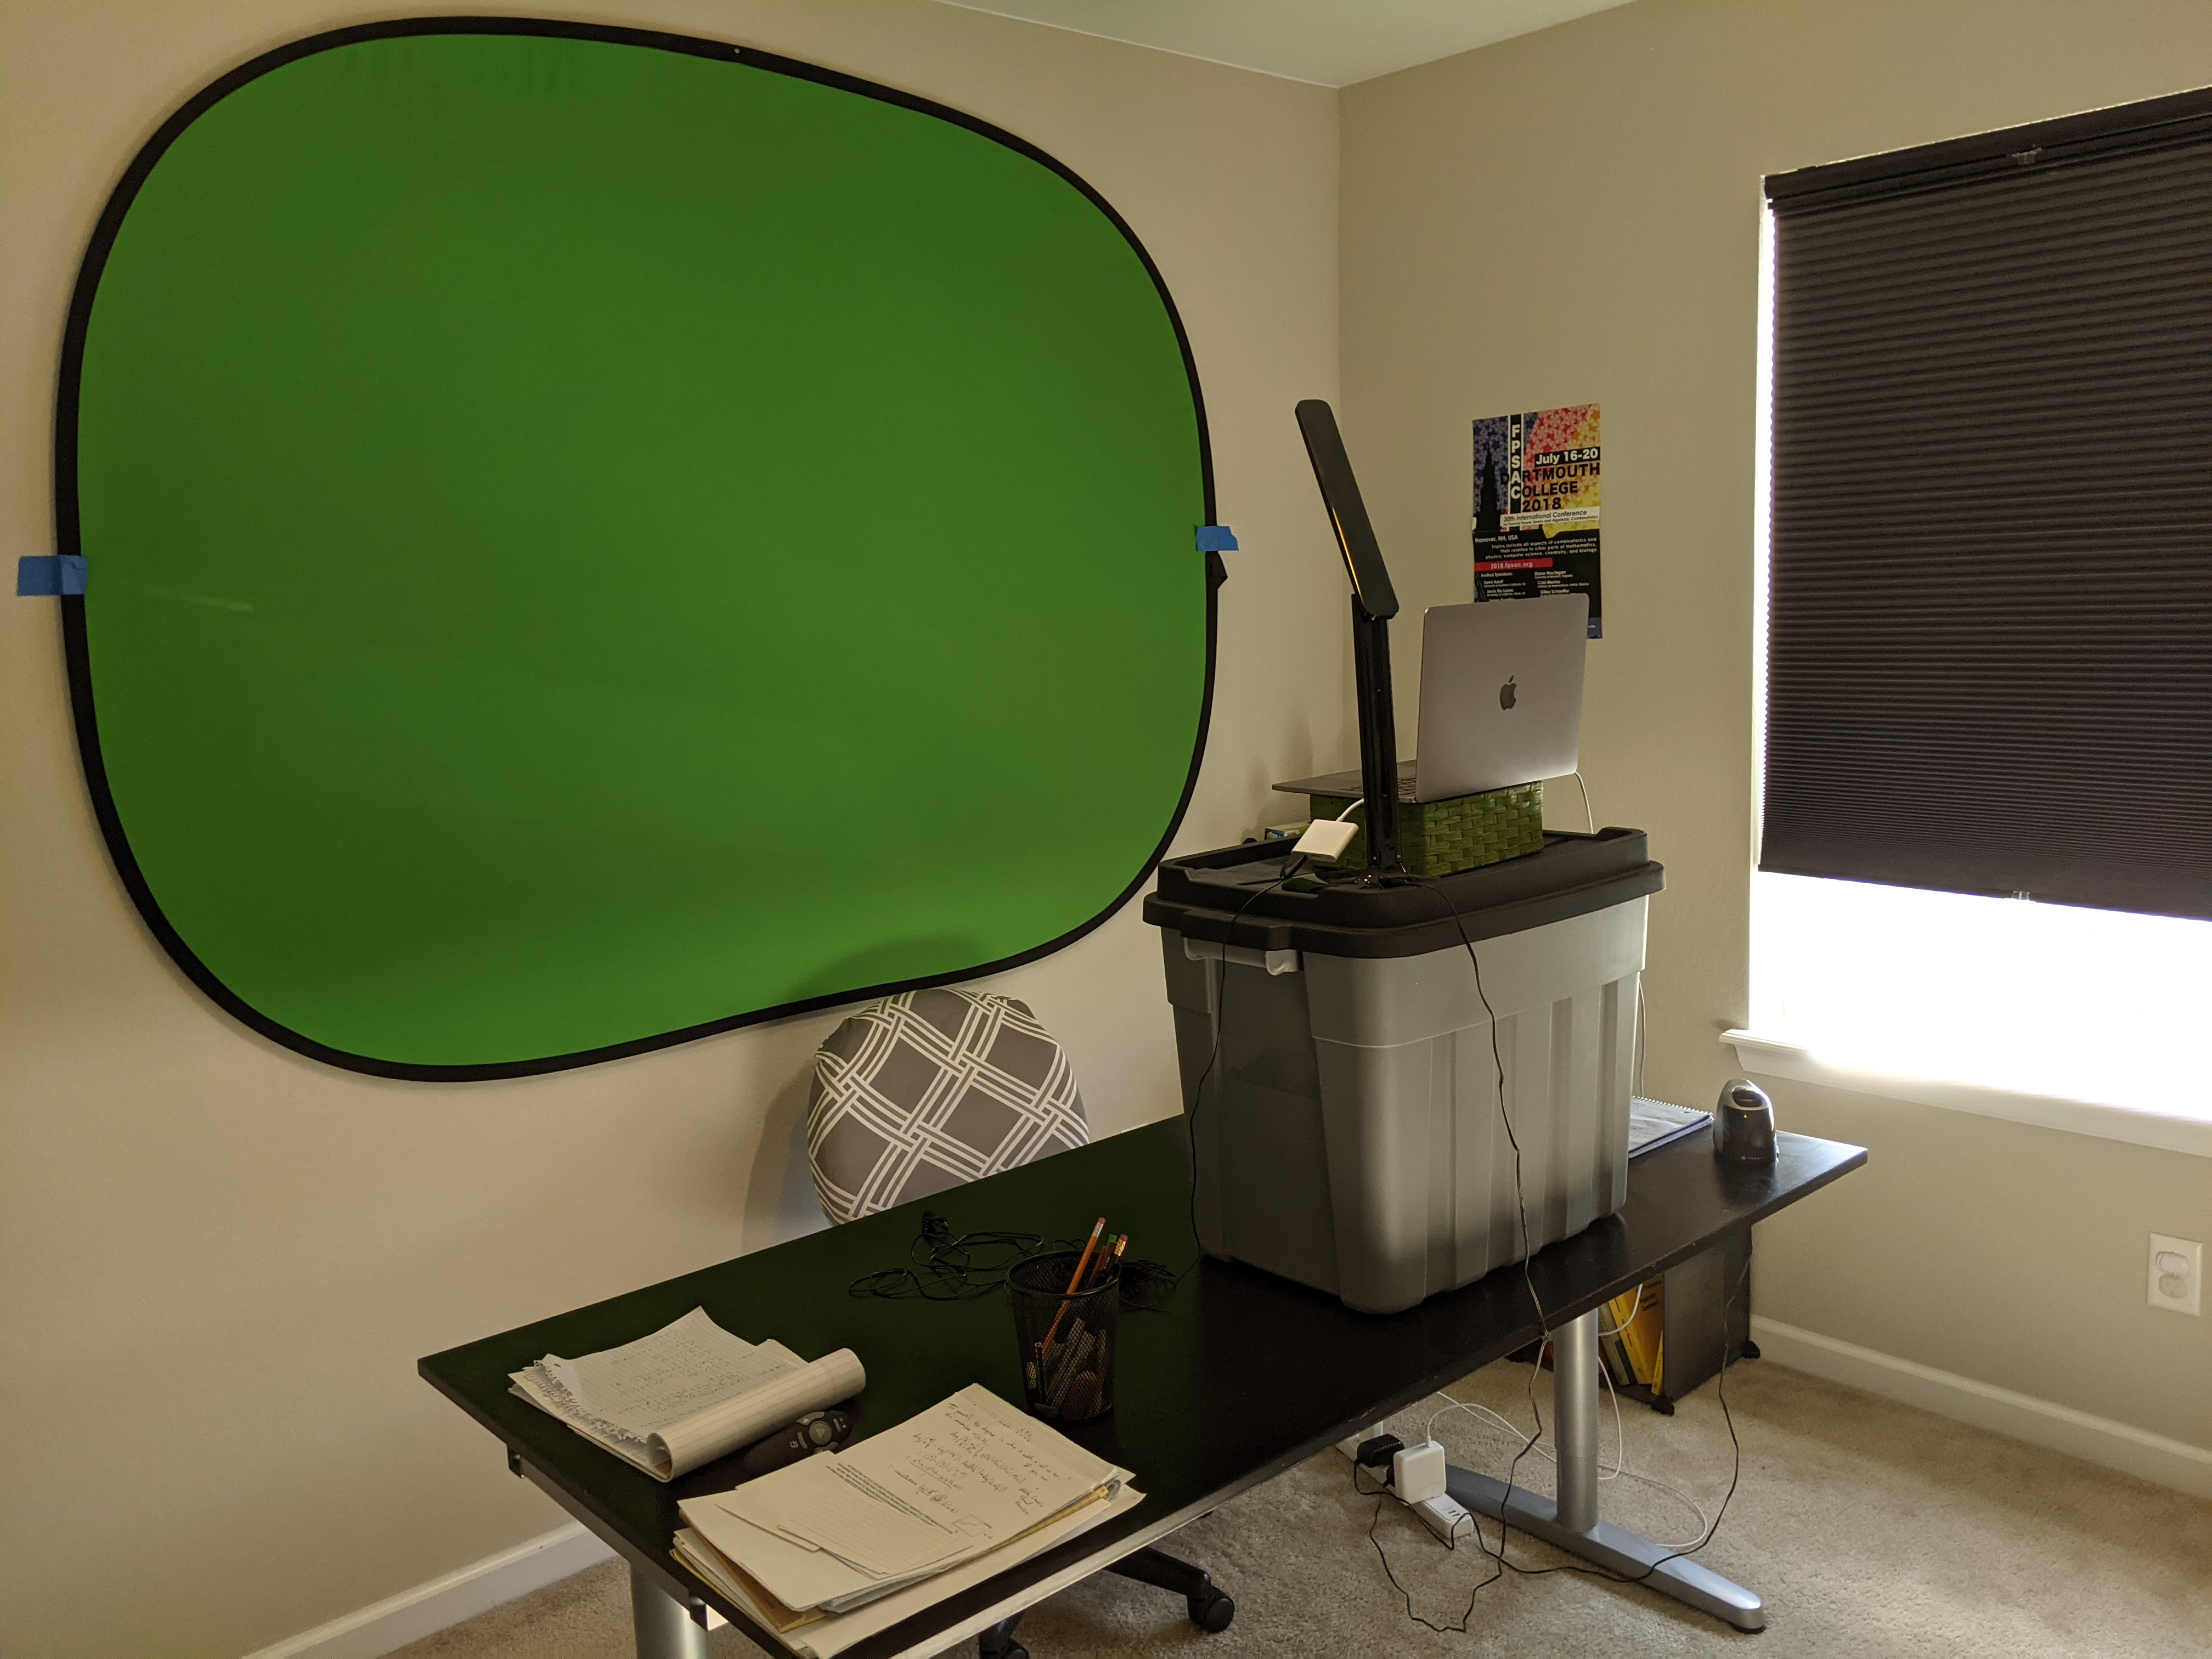 A green screen.